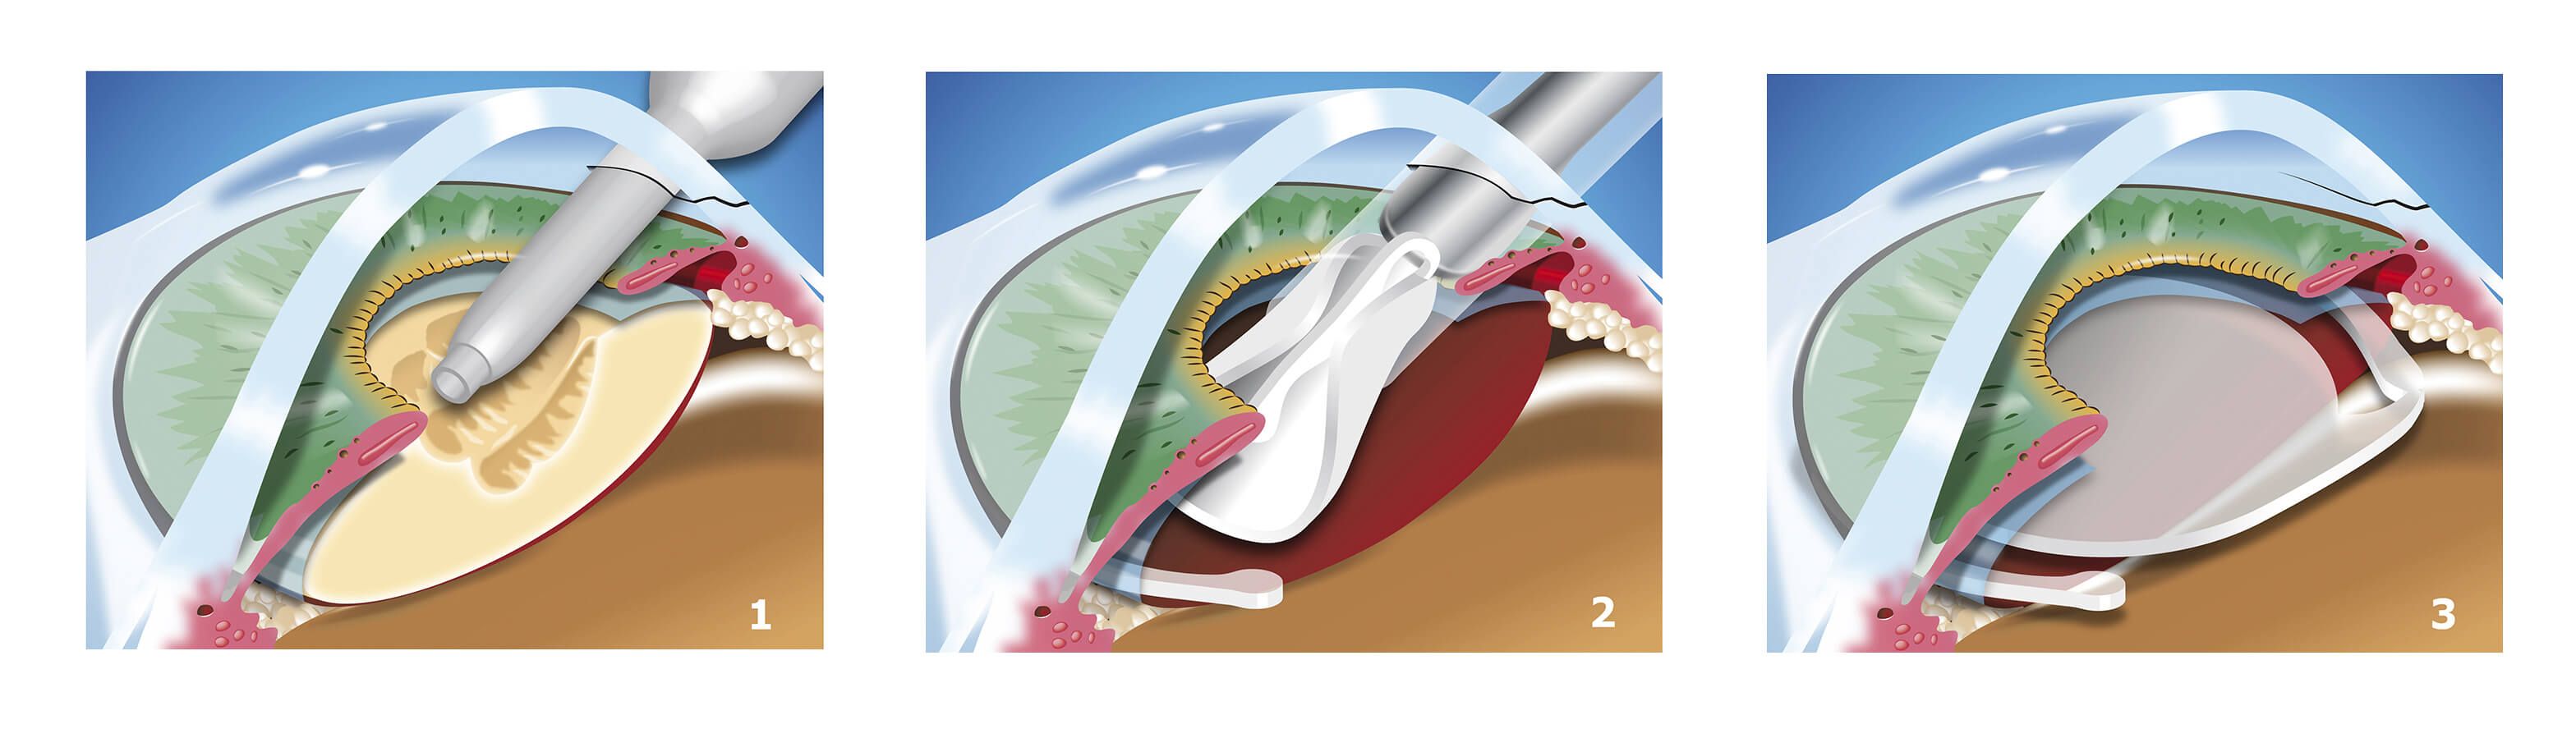 dropless cataract surgery